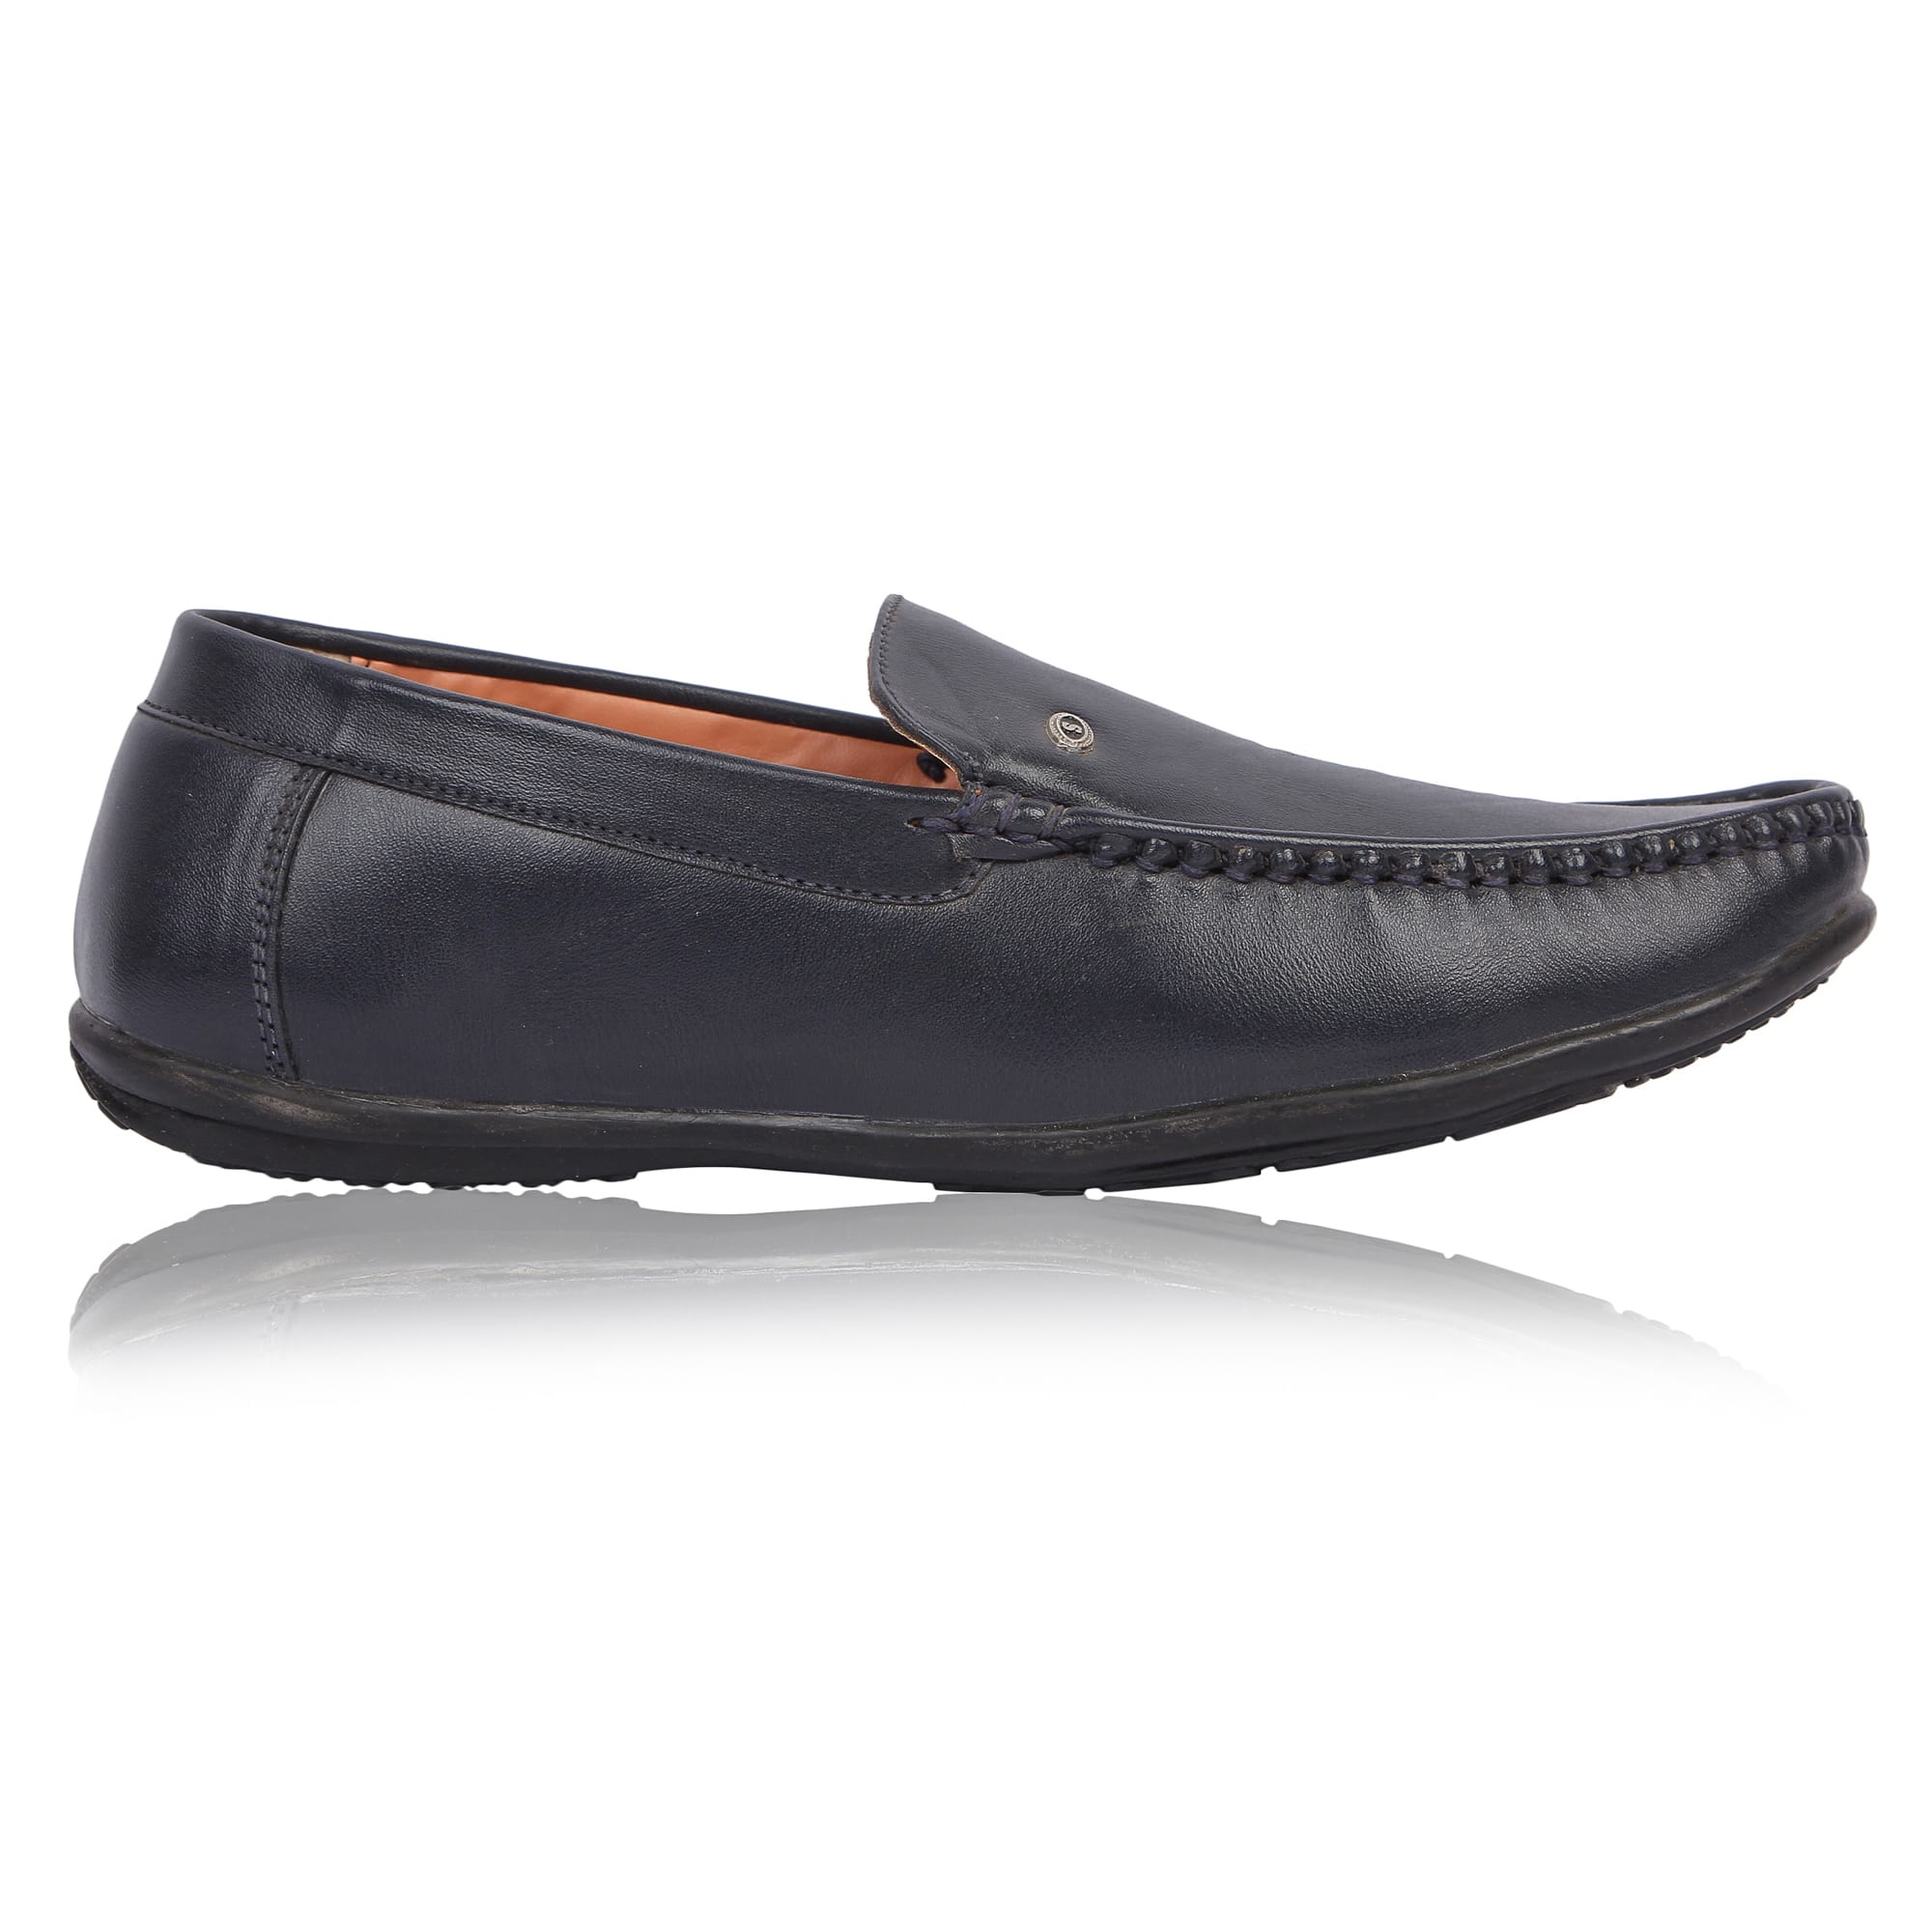 IMG_0242-min | Online Store for Men Footwear in India